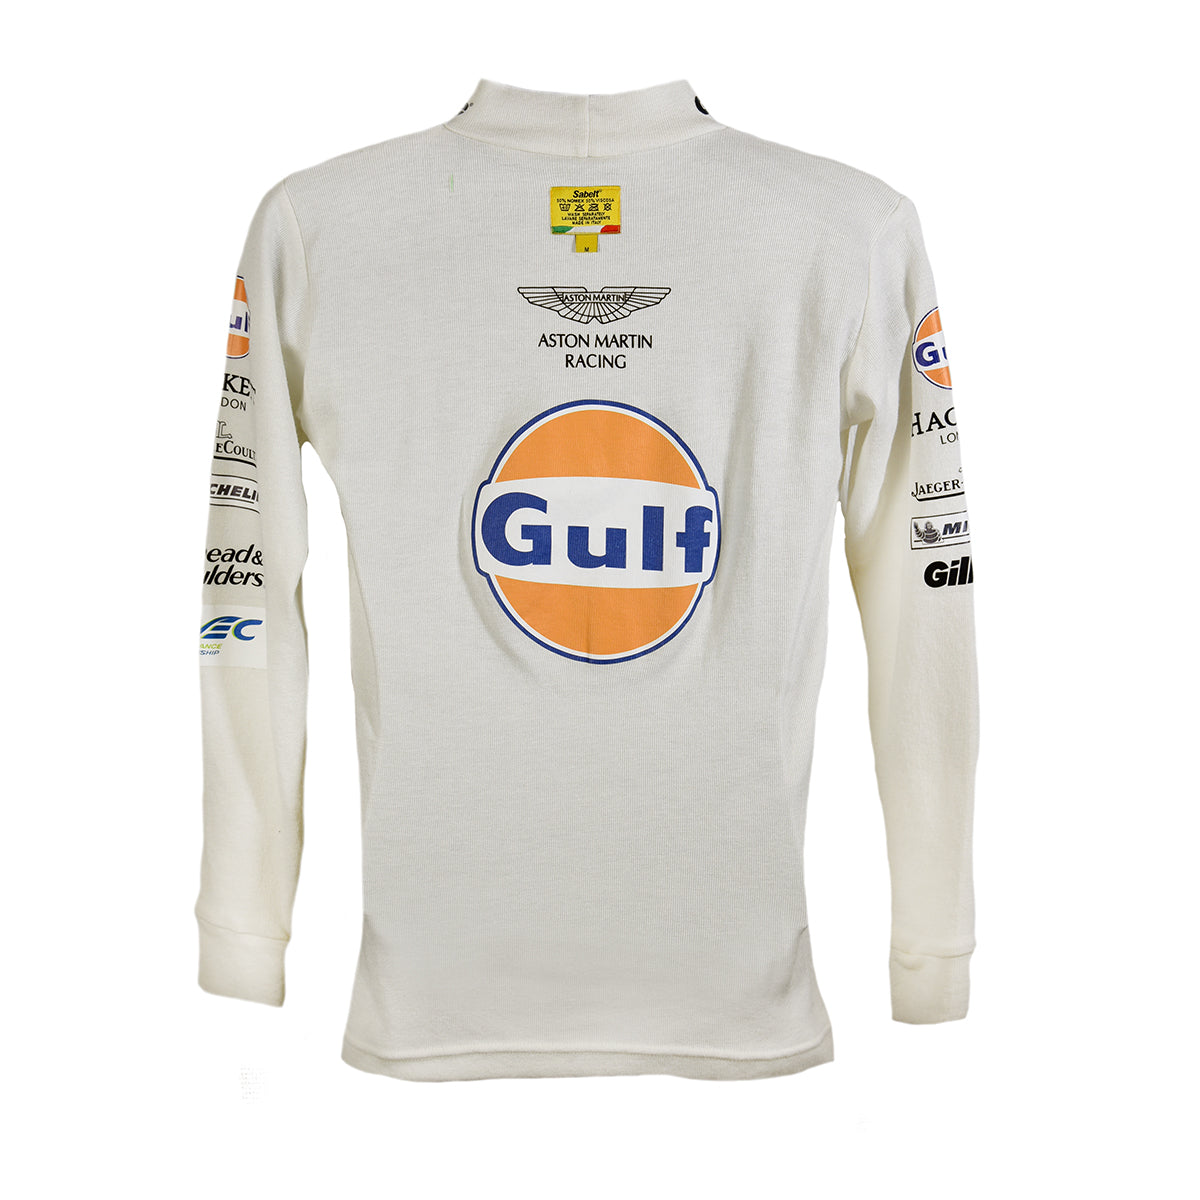 2014/15 Bruno Senna Race Used Gulf Aston Martin Team WEC Nomex Undershirt